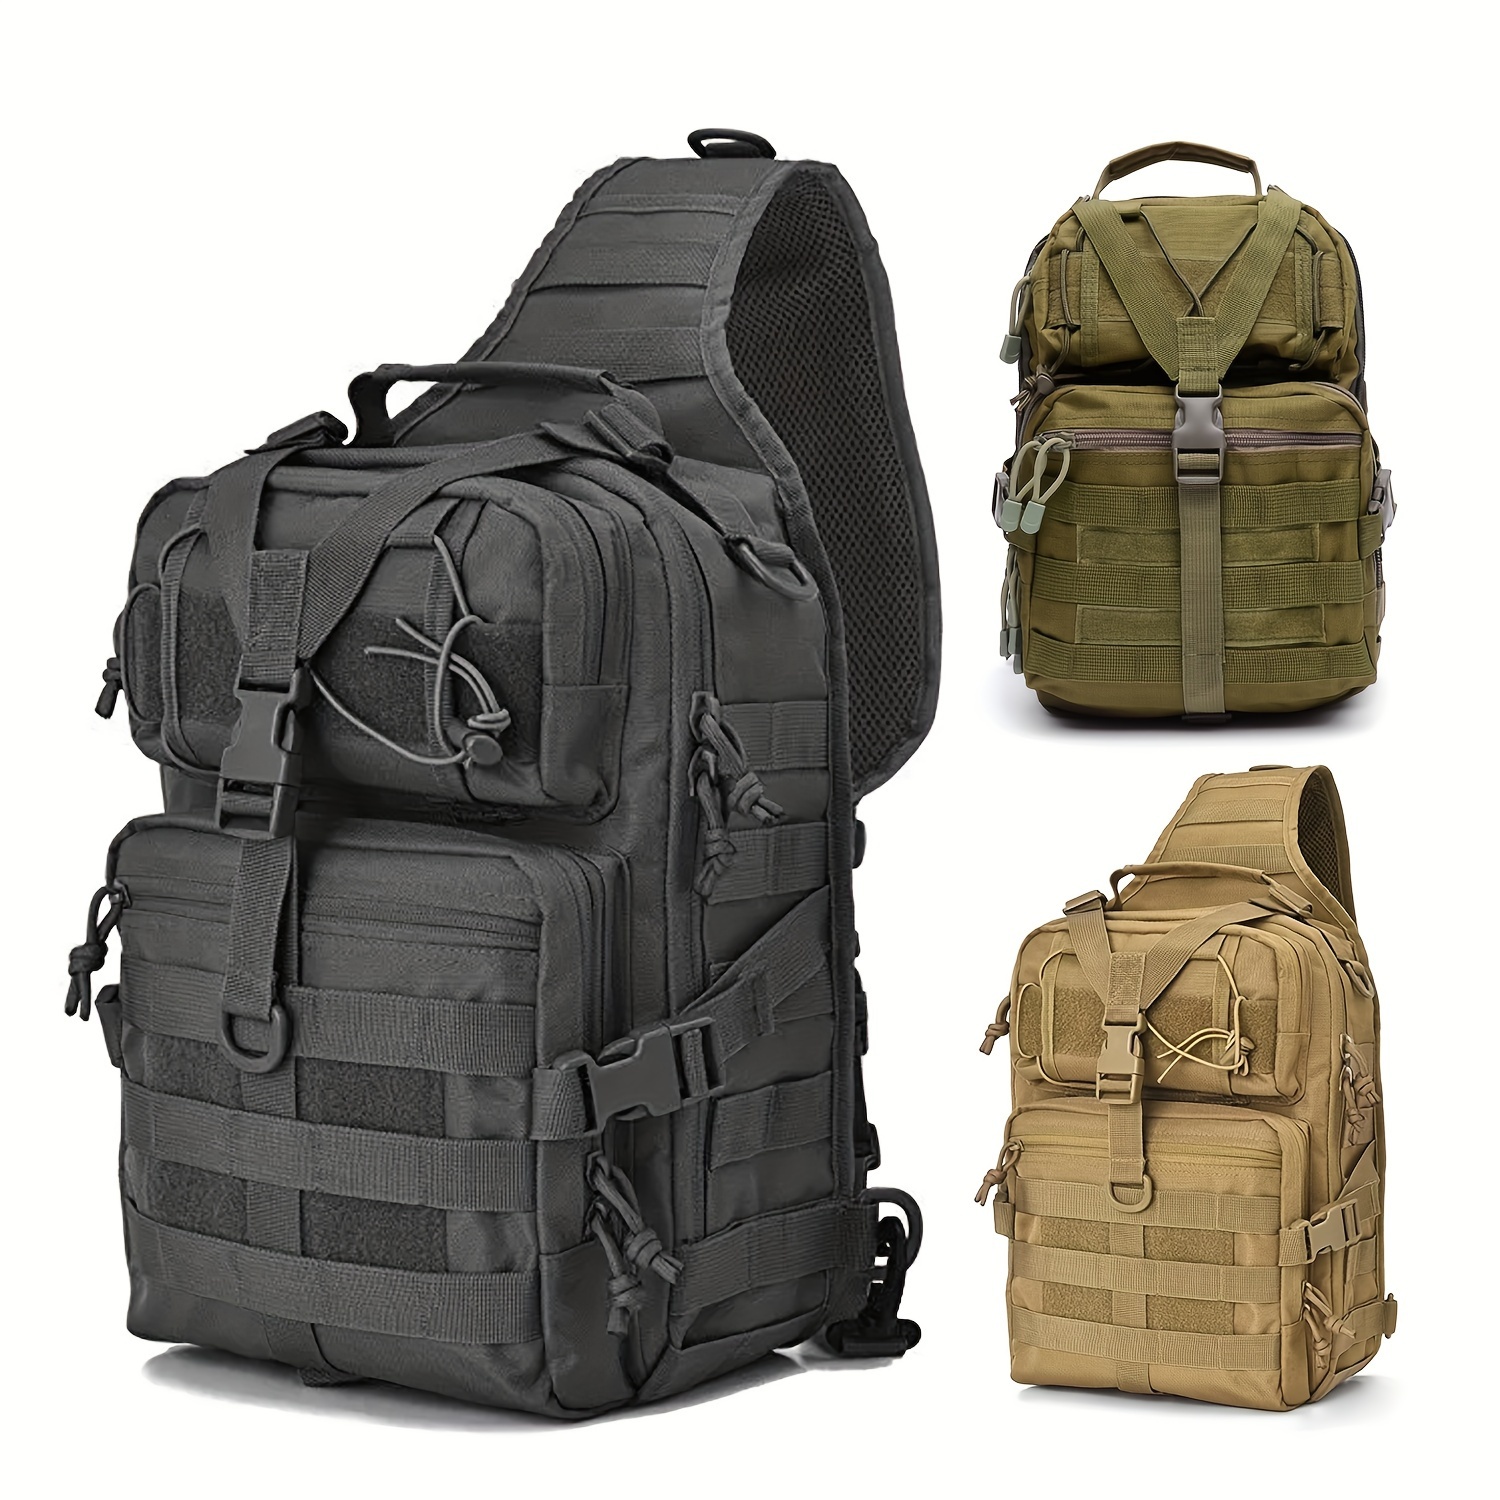 https://img.kwcdn.com/product/tactical-shoulder-backpack/d69d2f15w98k18-2bbcbd32/Fancyalgo/VirtualModelMatting/cc4ccc57429ae9446518adc363c57e42.jpg